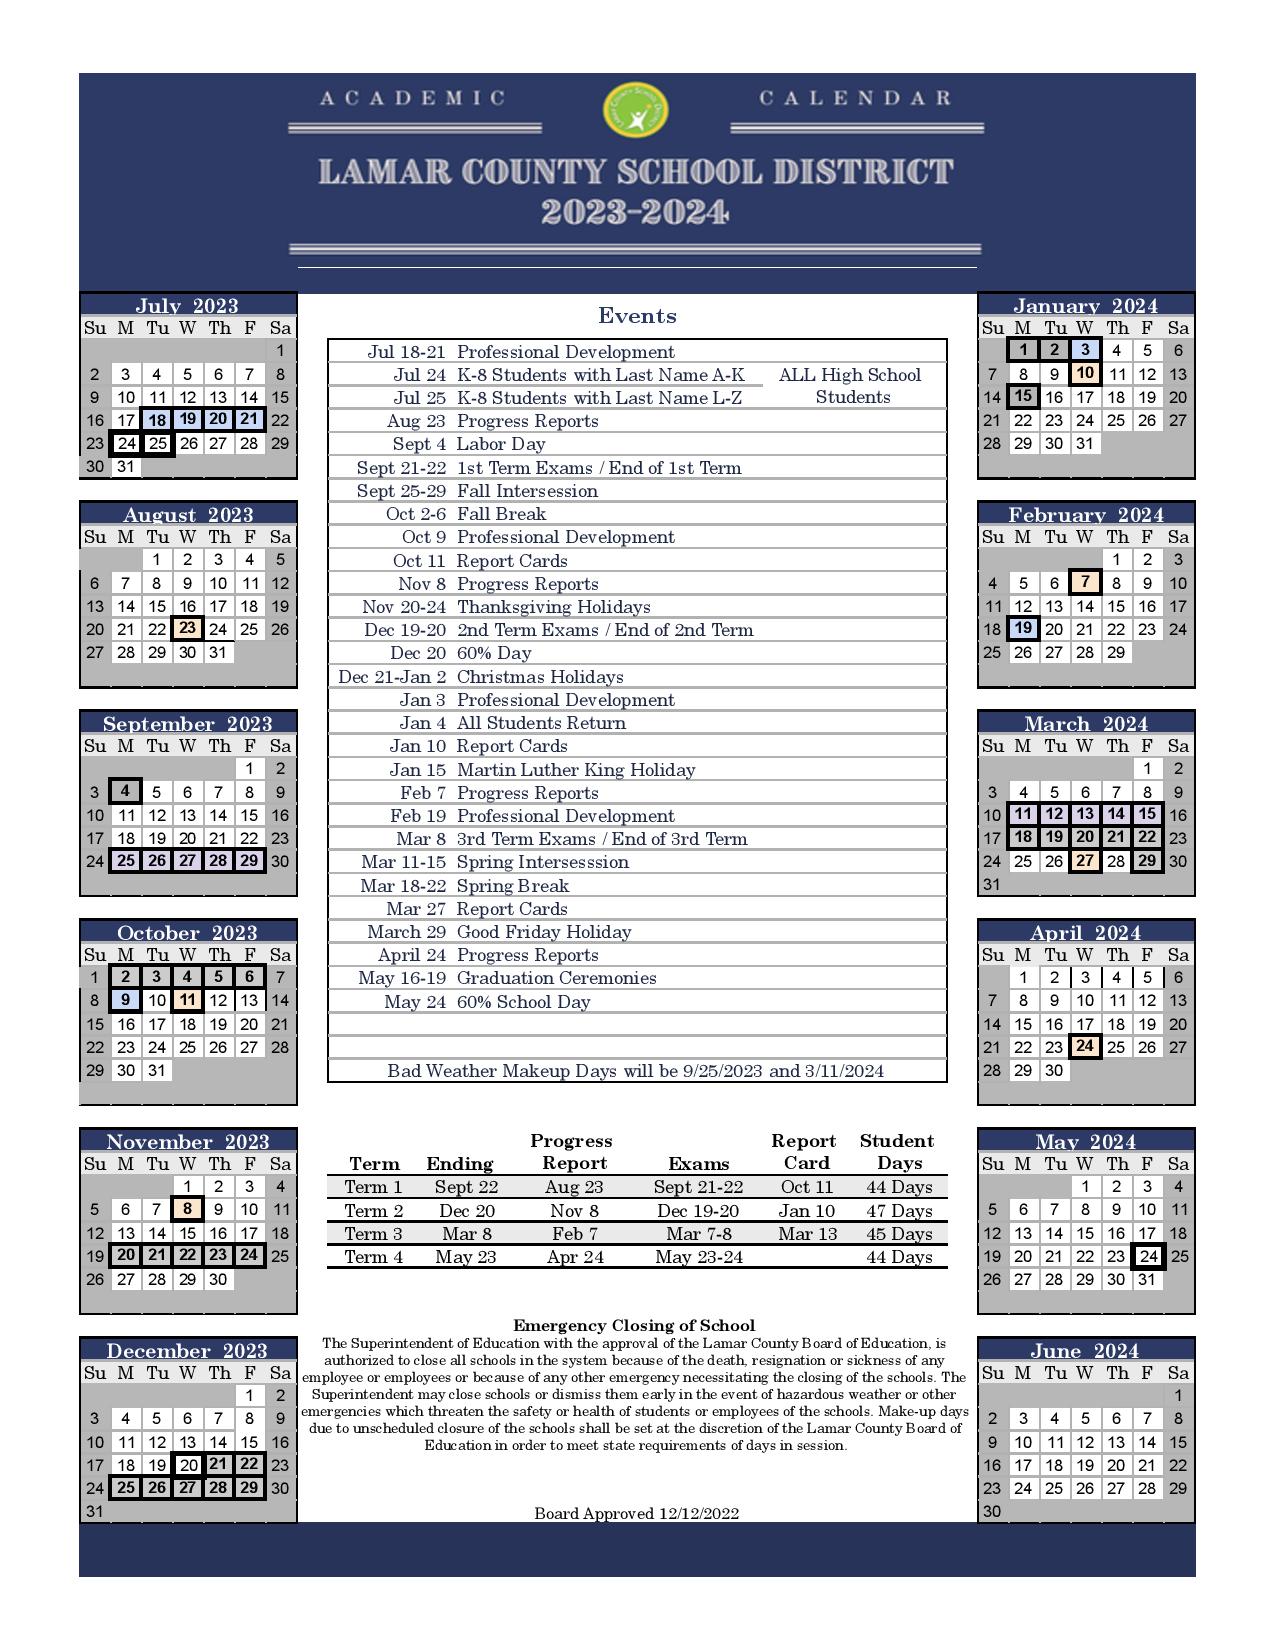 Lamar County Schools Calendar 2023 2024 in PDF